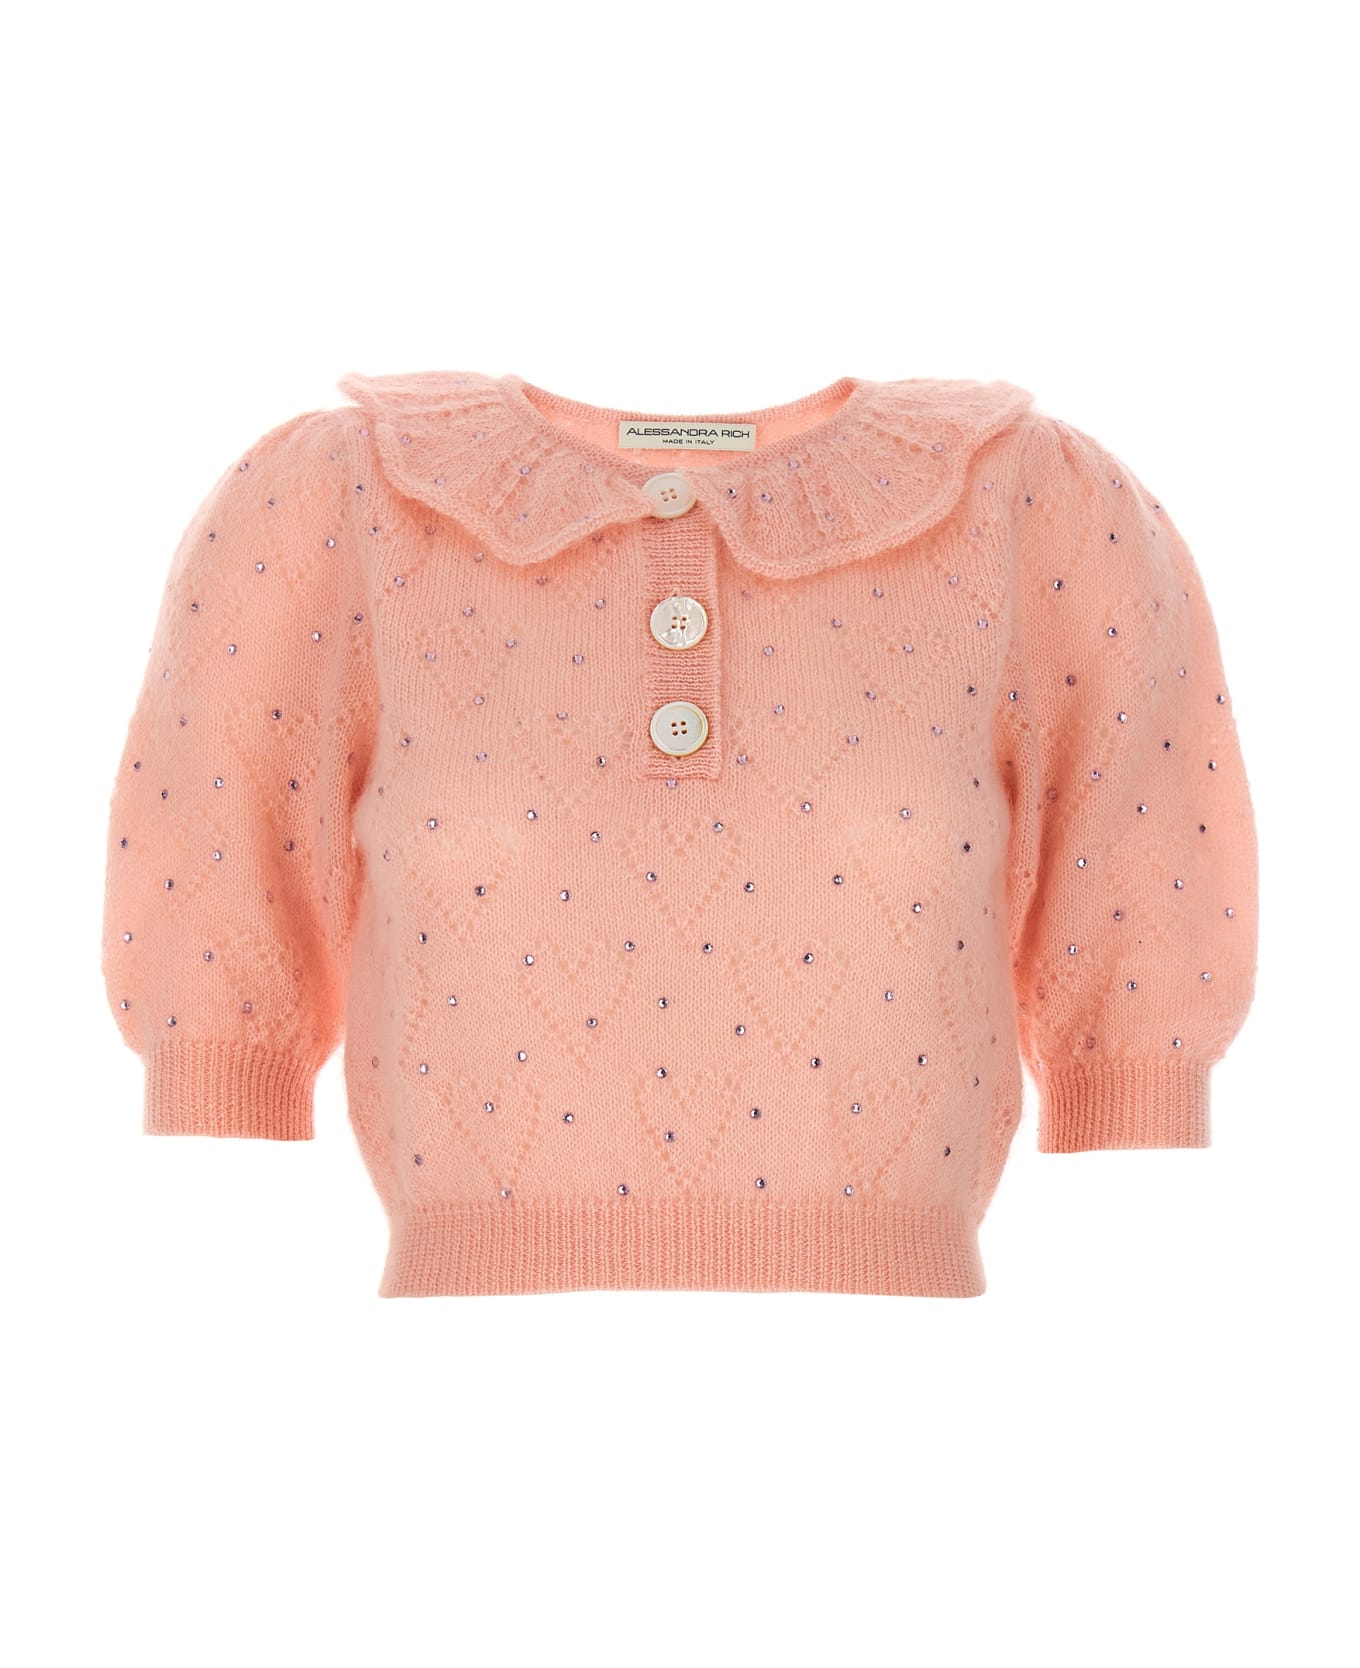 Alessandra Rich Rhinestone Sweater - Pink ニットウェア